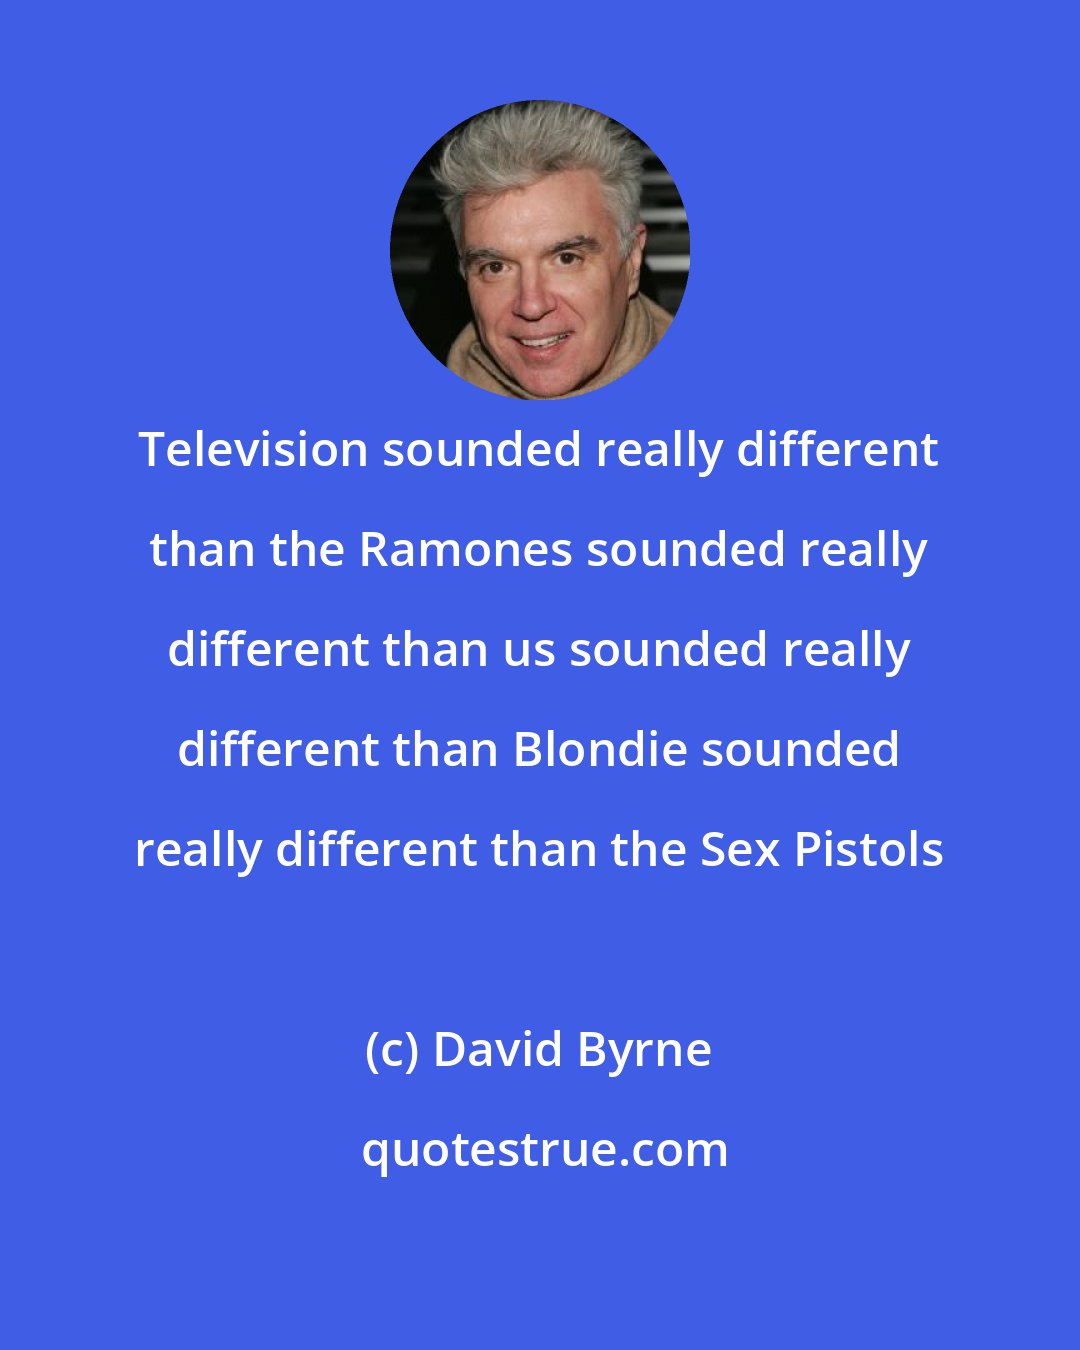 David Byrne: Television sounded really different than the Ramones sounded really different than us sounded really different than Blondie sounded really different than the Sex Pistols